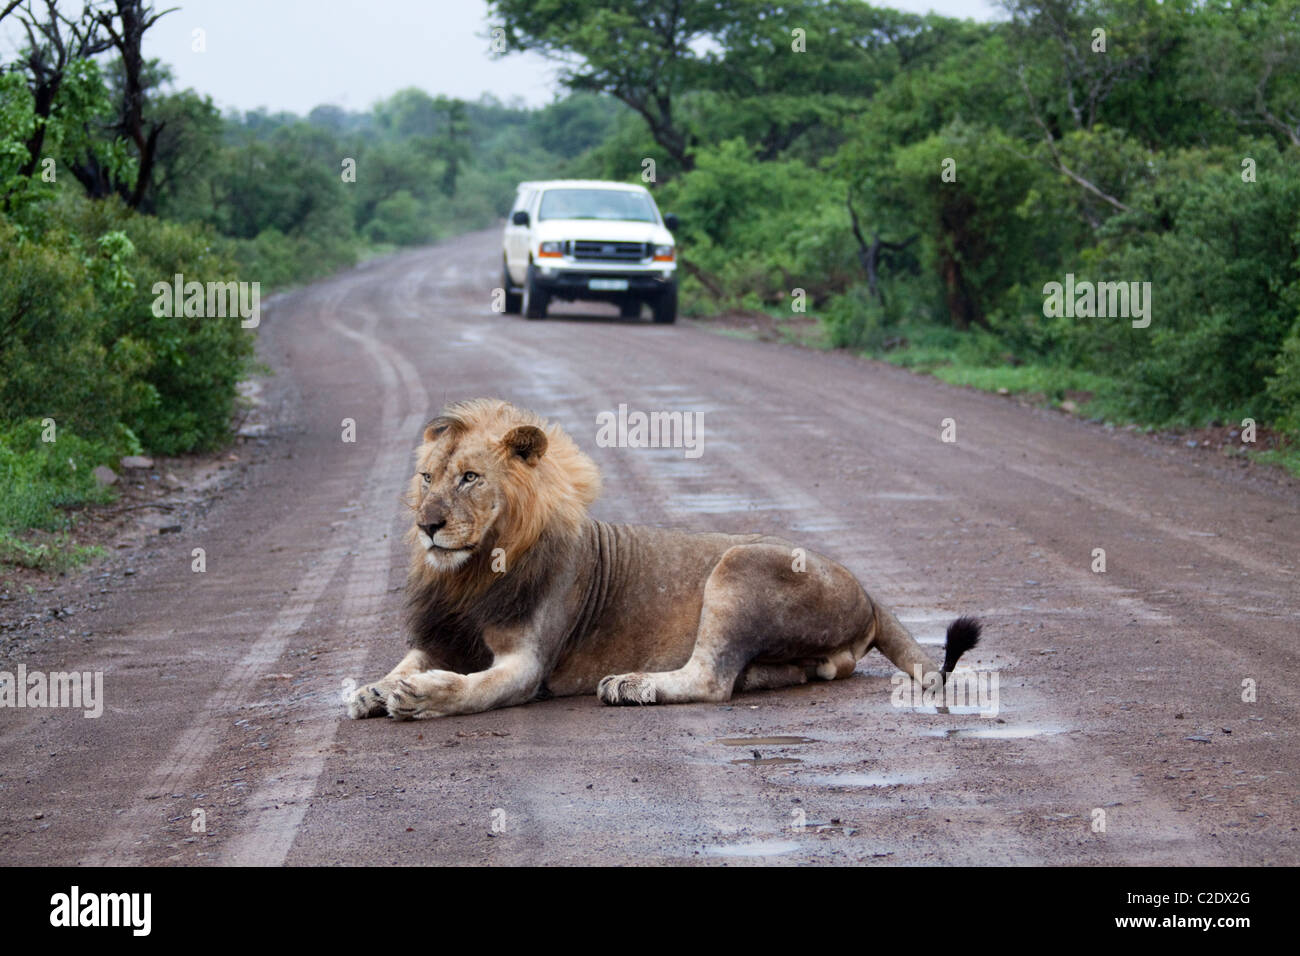 León macho (Panthera leo). Las especies vulnerables. Lion acostado sobre una carretera turística en Imfolozi. Foto de stock